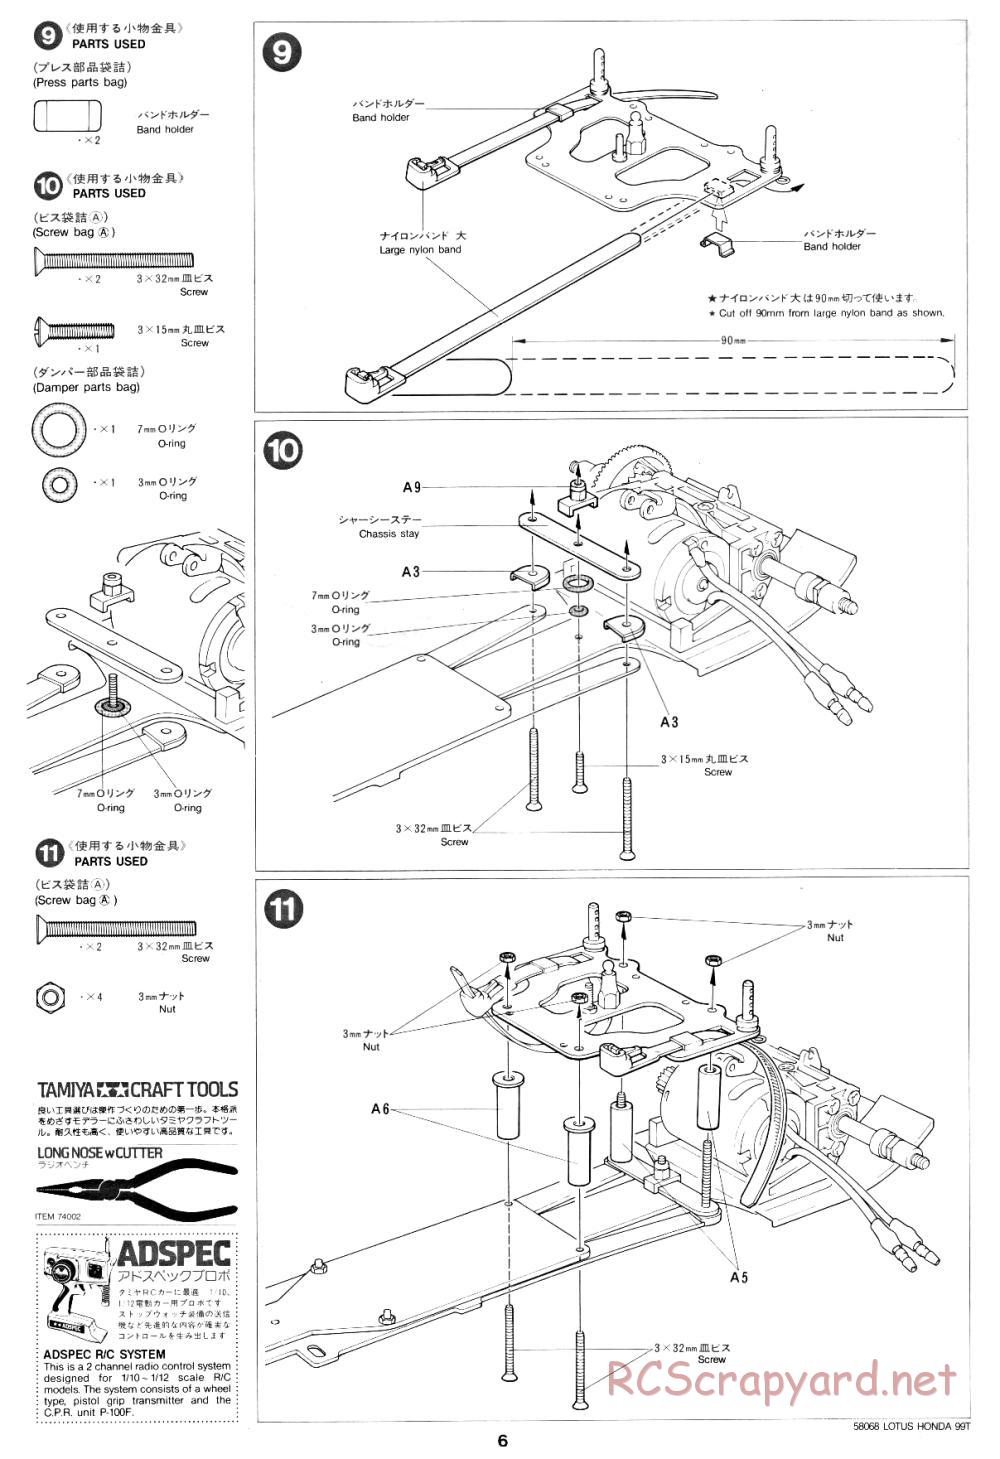 Tamiya - Lotus Honda 99T - 58068 - Manual - Page 6